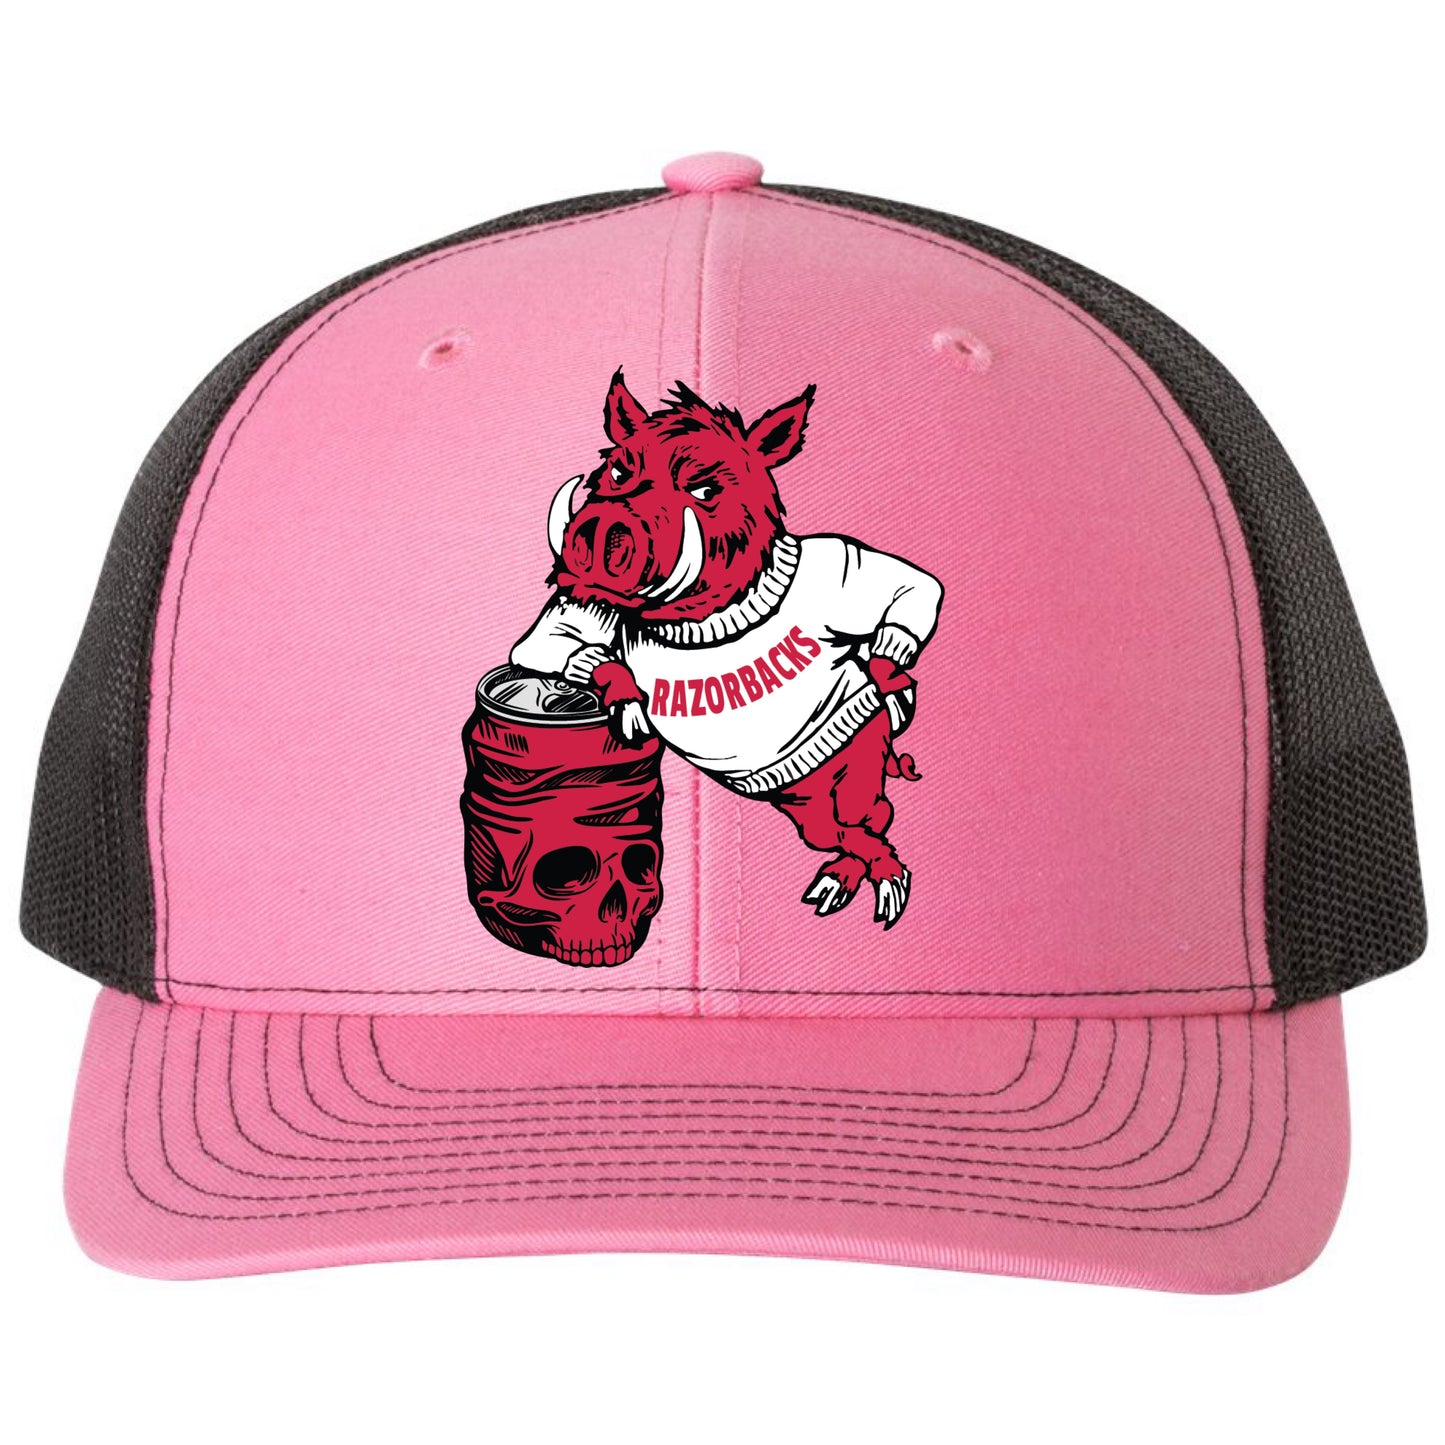 Arkansas Razorbacks- Skull Crushers 3D Snapback Trucker Hat- Hot Pink/ Black - Ten Gallon Hat Co.